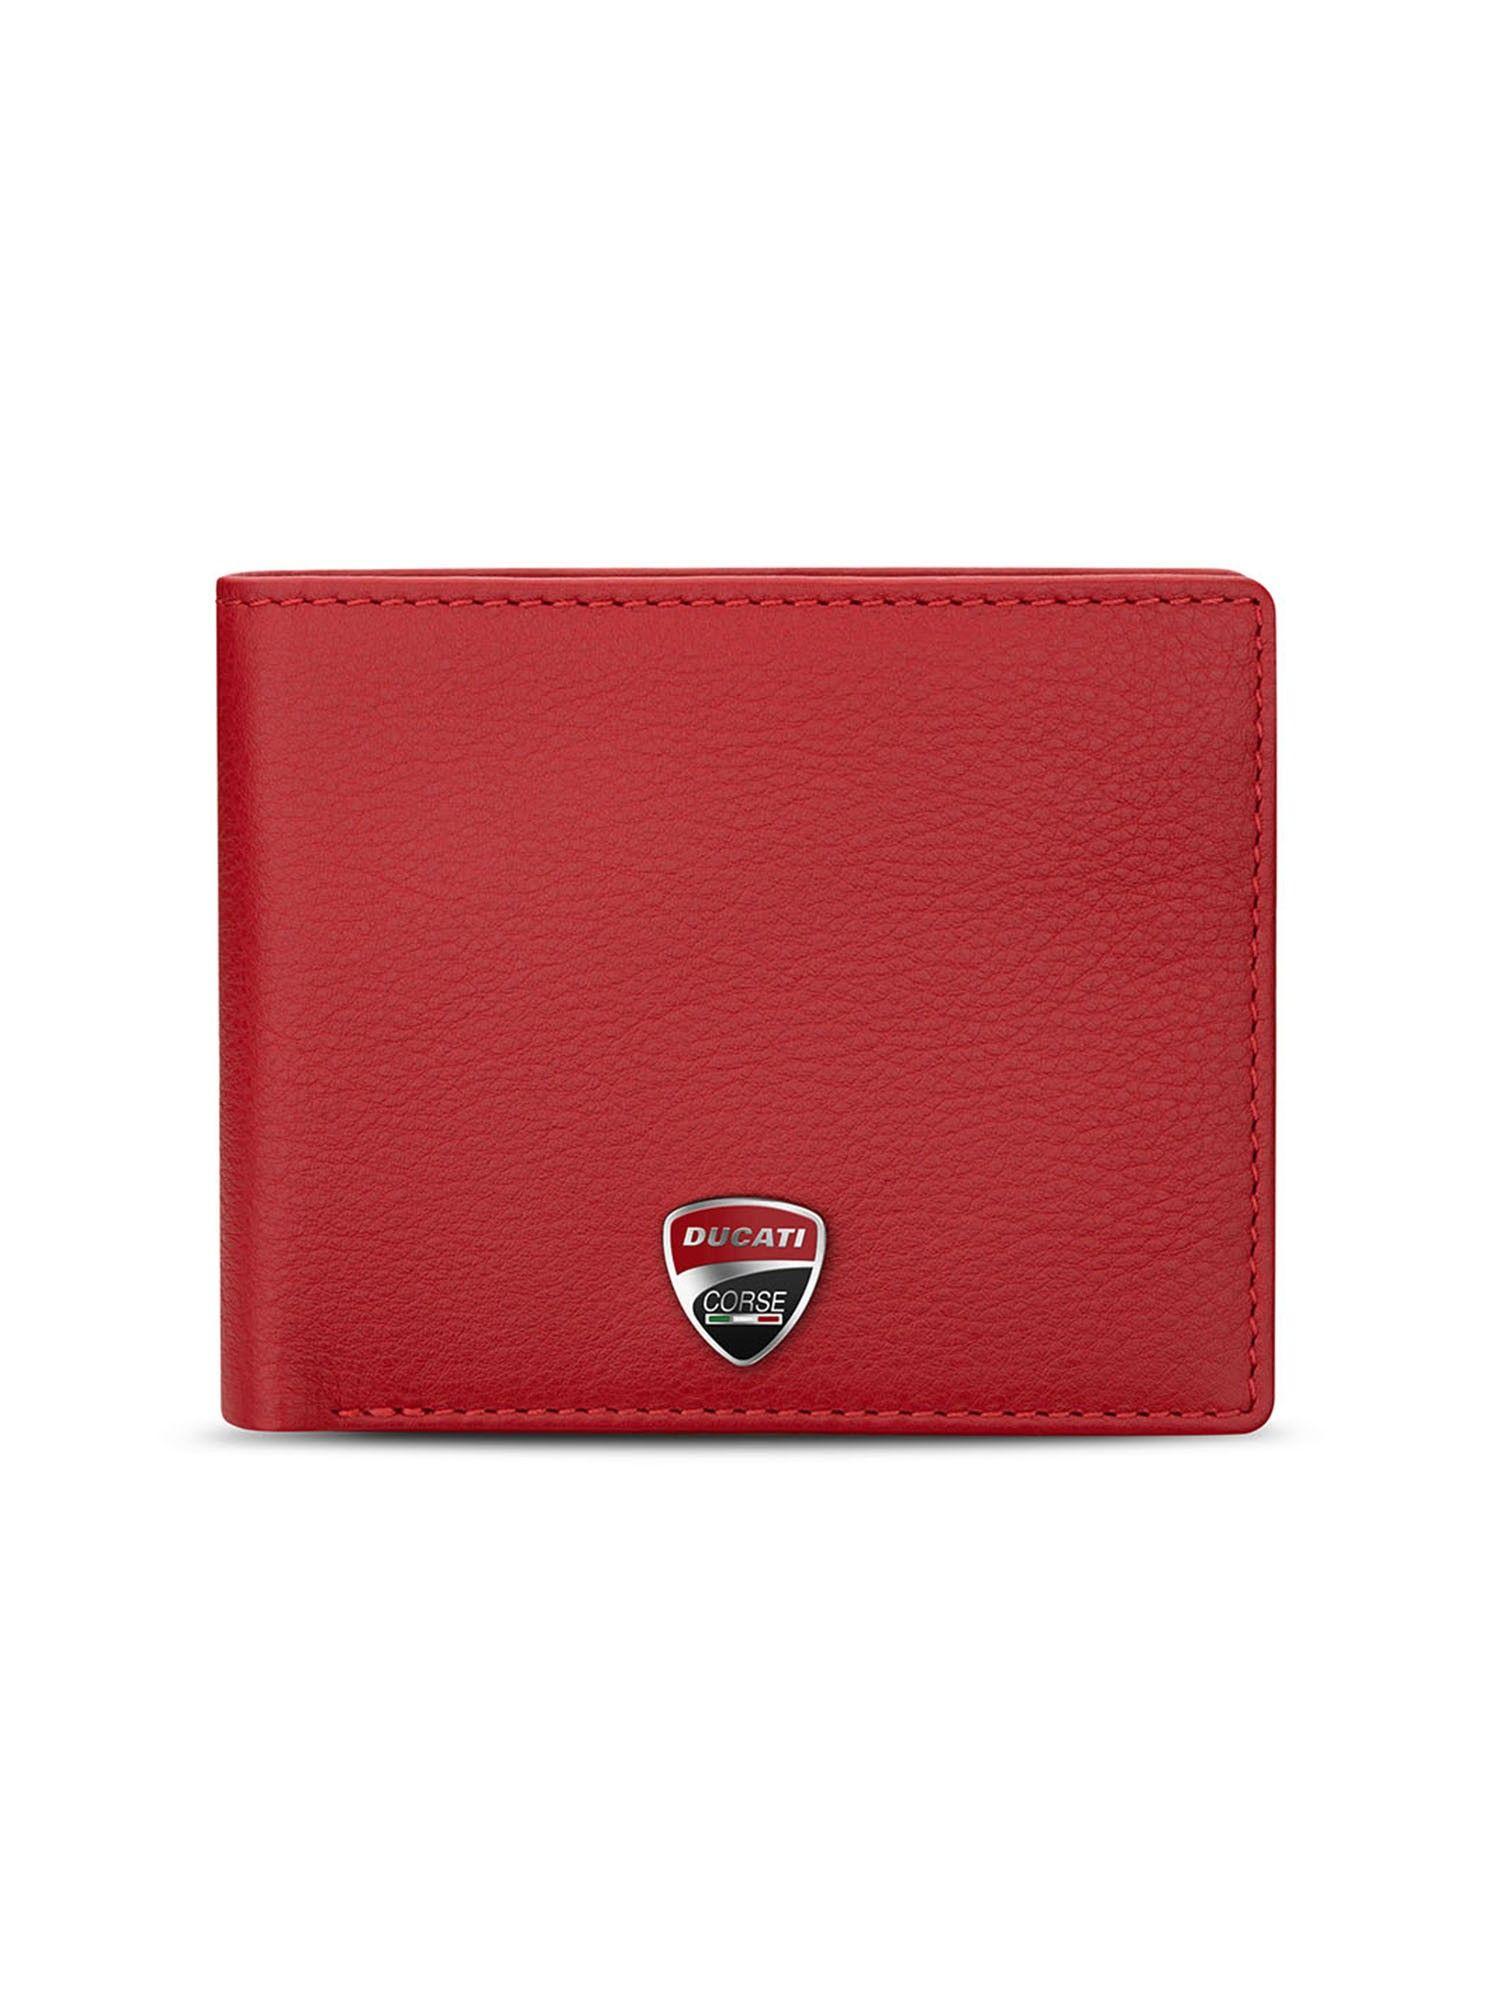 lucca genuine leather wallet for men - dtlgw2201003